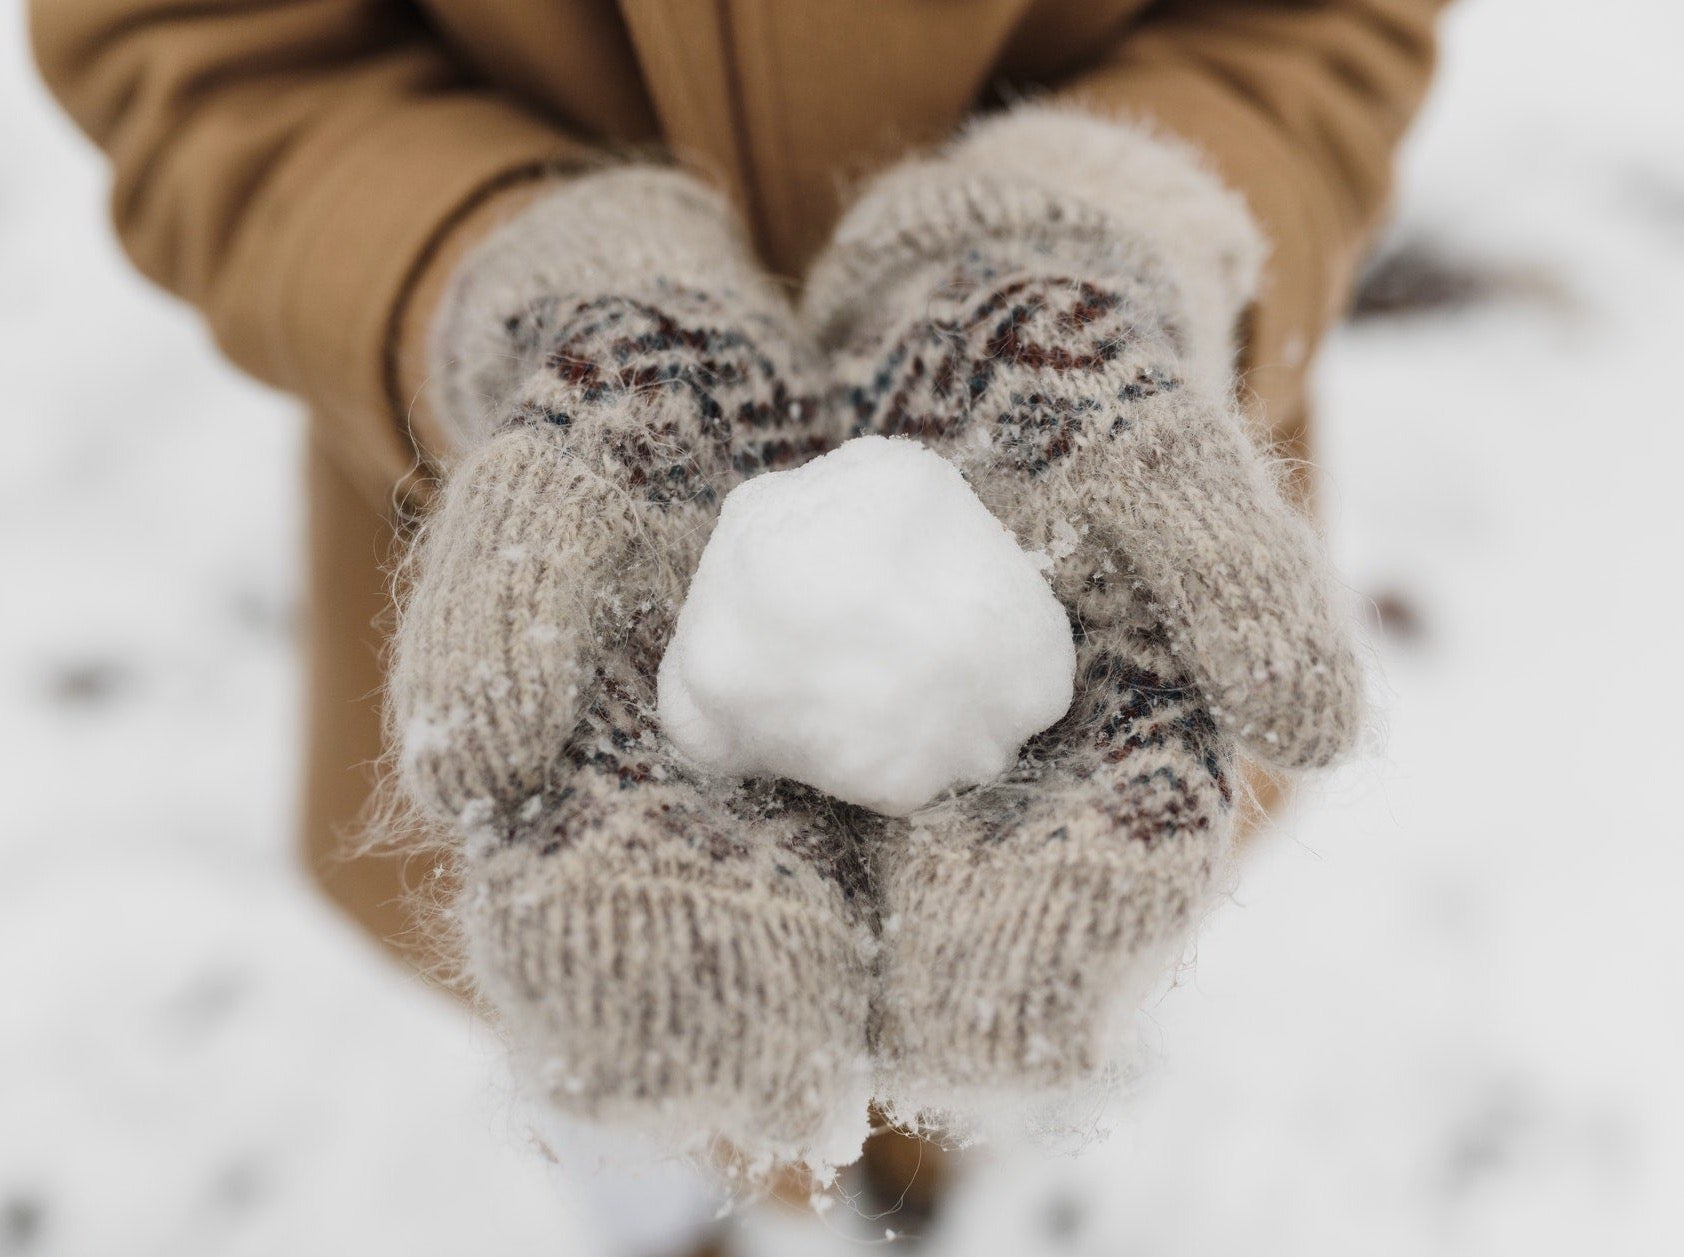 Mini Snowballs (winter not required!)